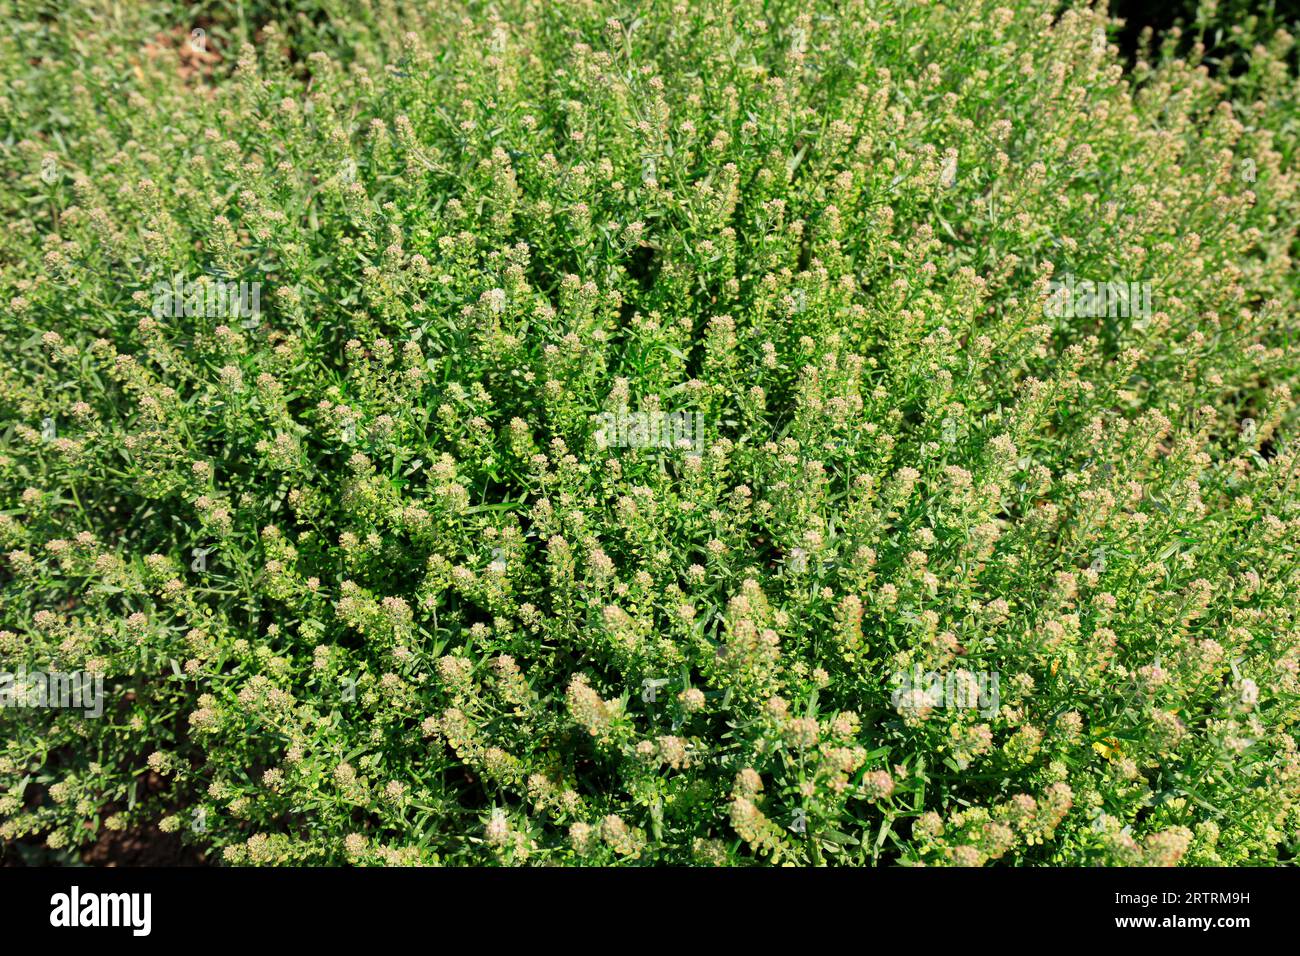 flowers of cruciferous plant Stock Photo